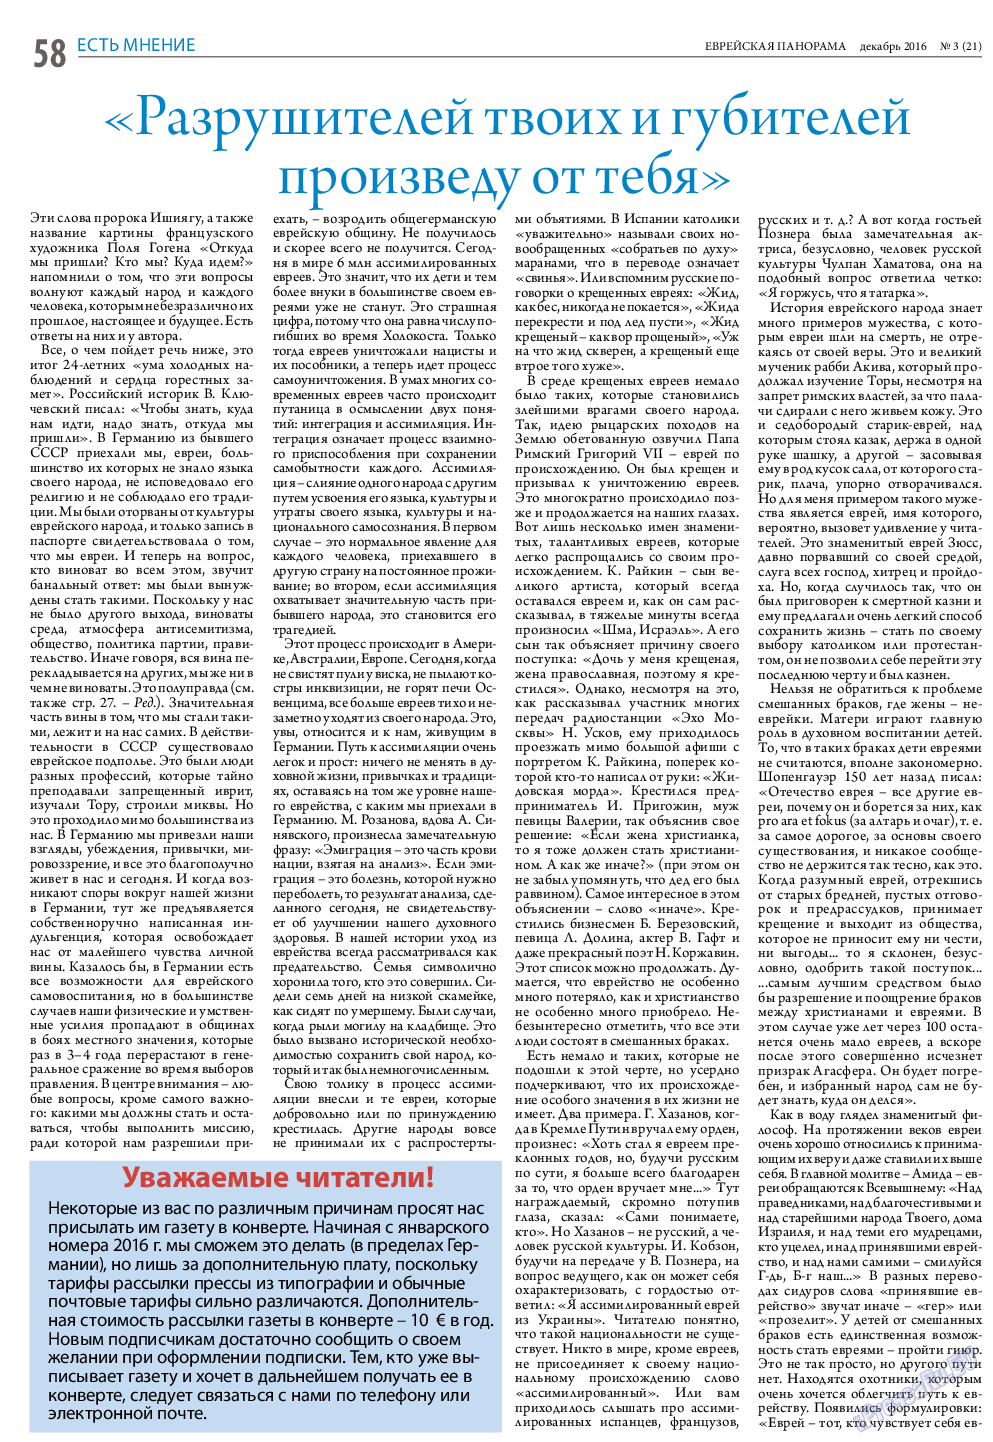 Еврейская панорама, газета. 2016 №3 стр.58